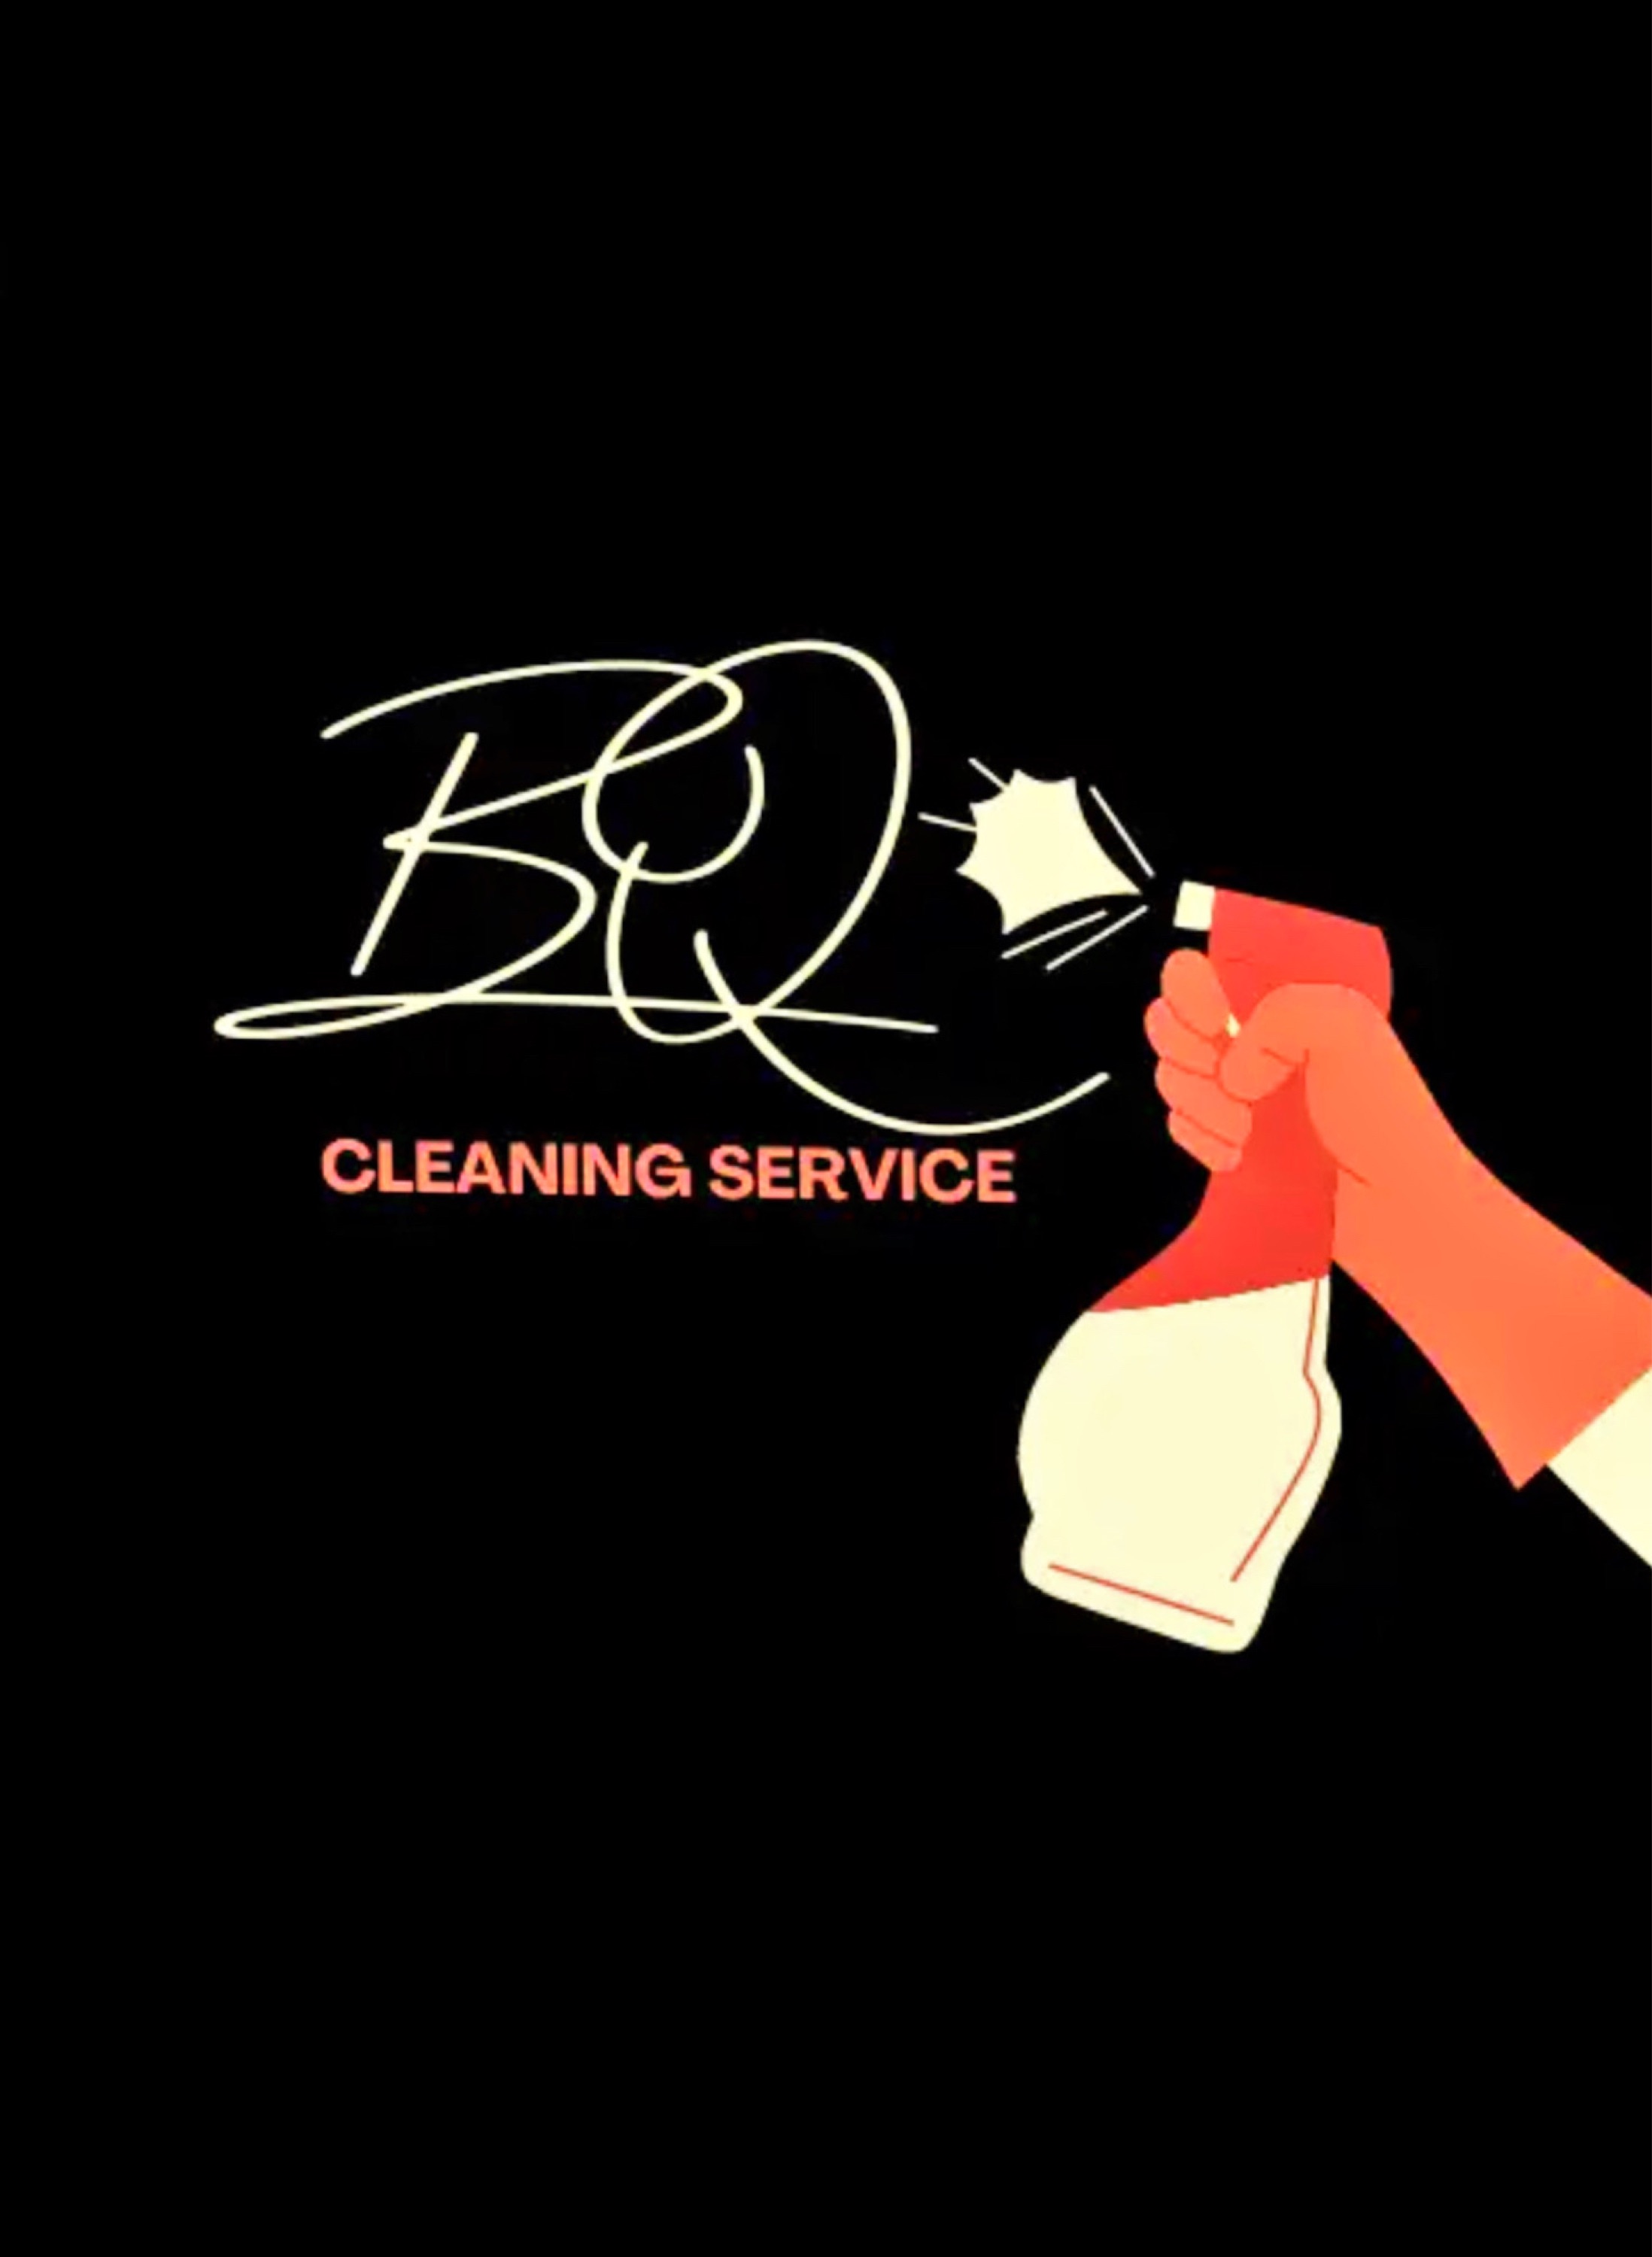 BQ Cleaning Service Logo